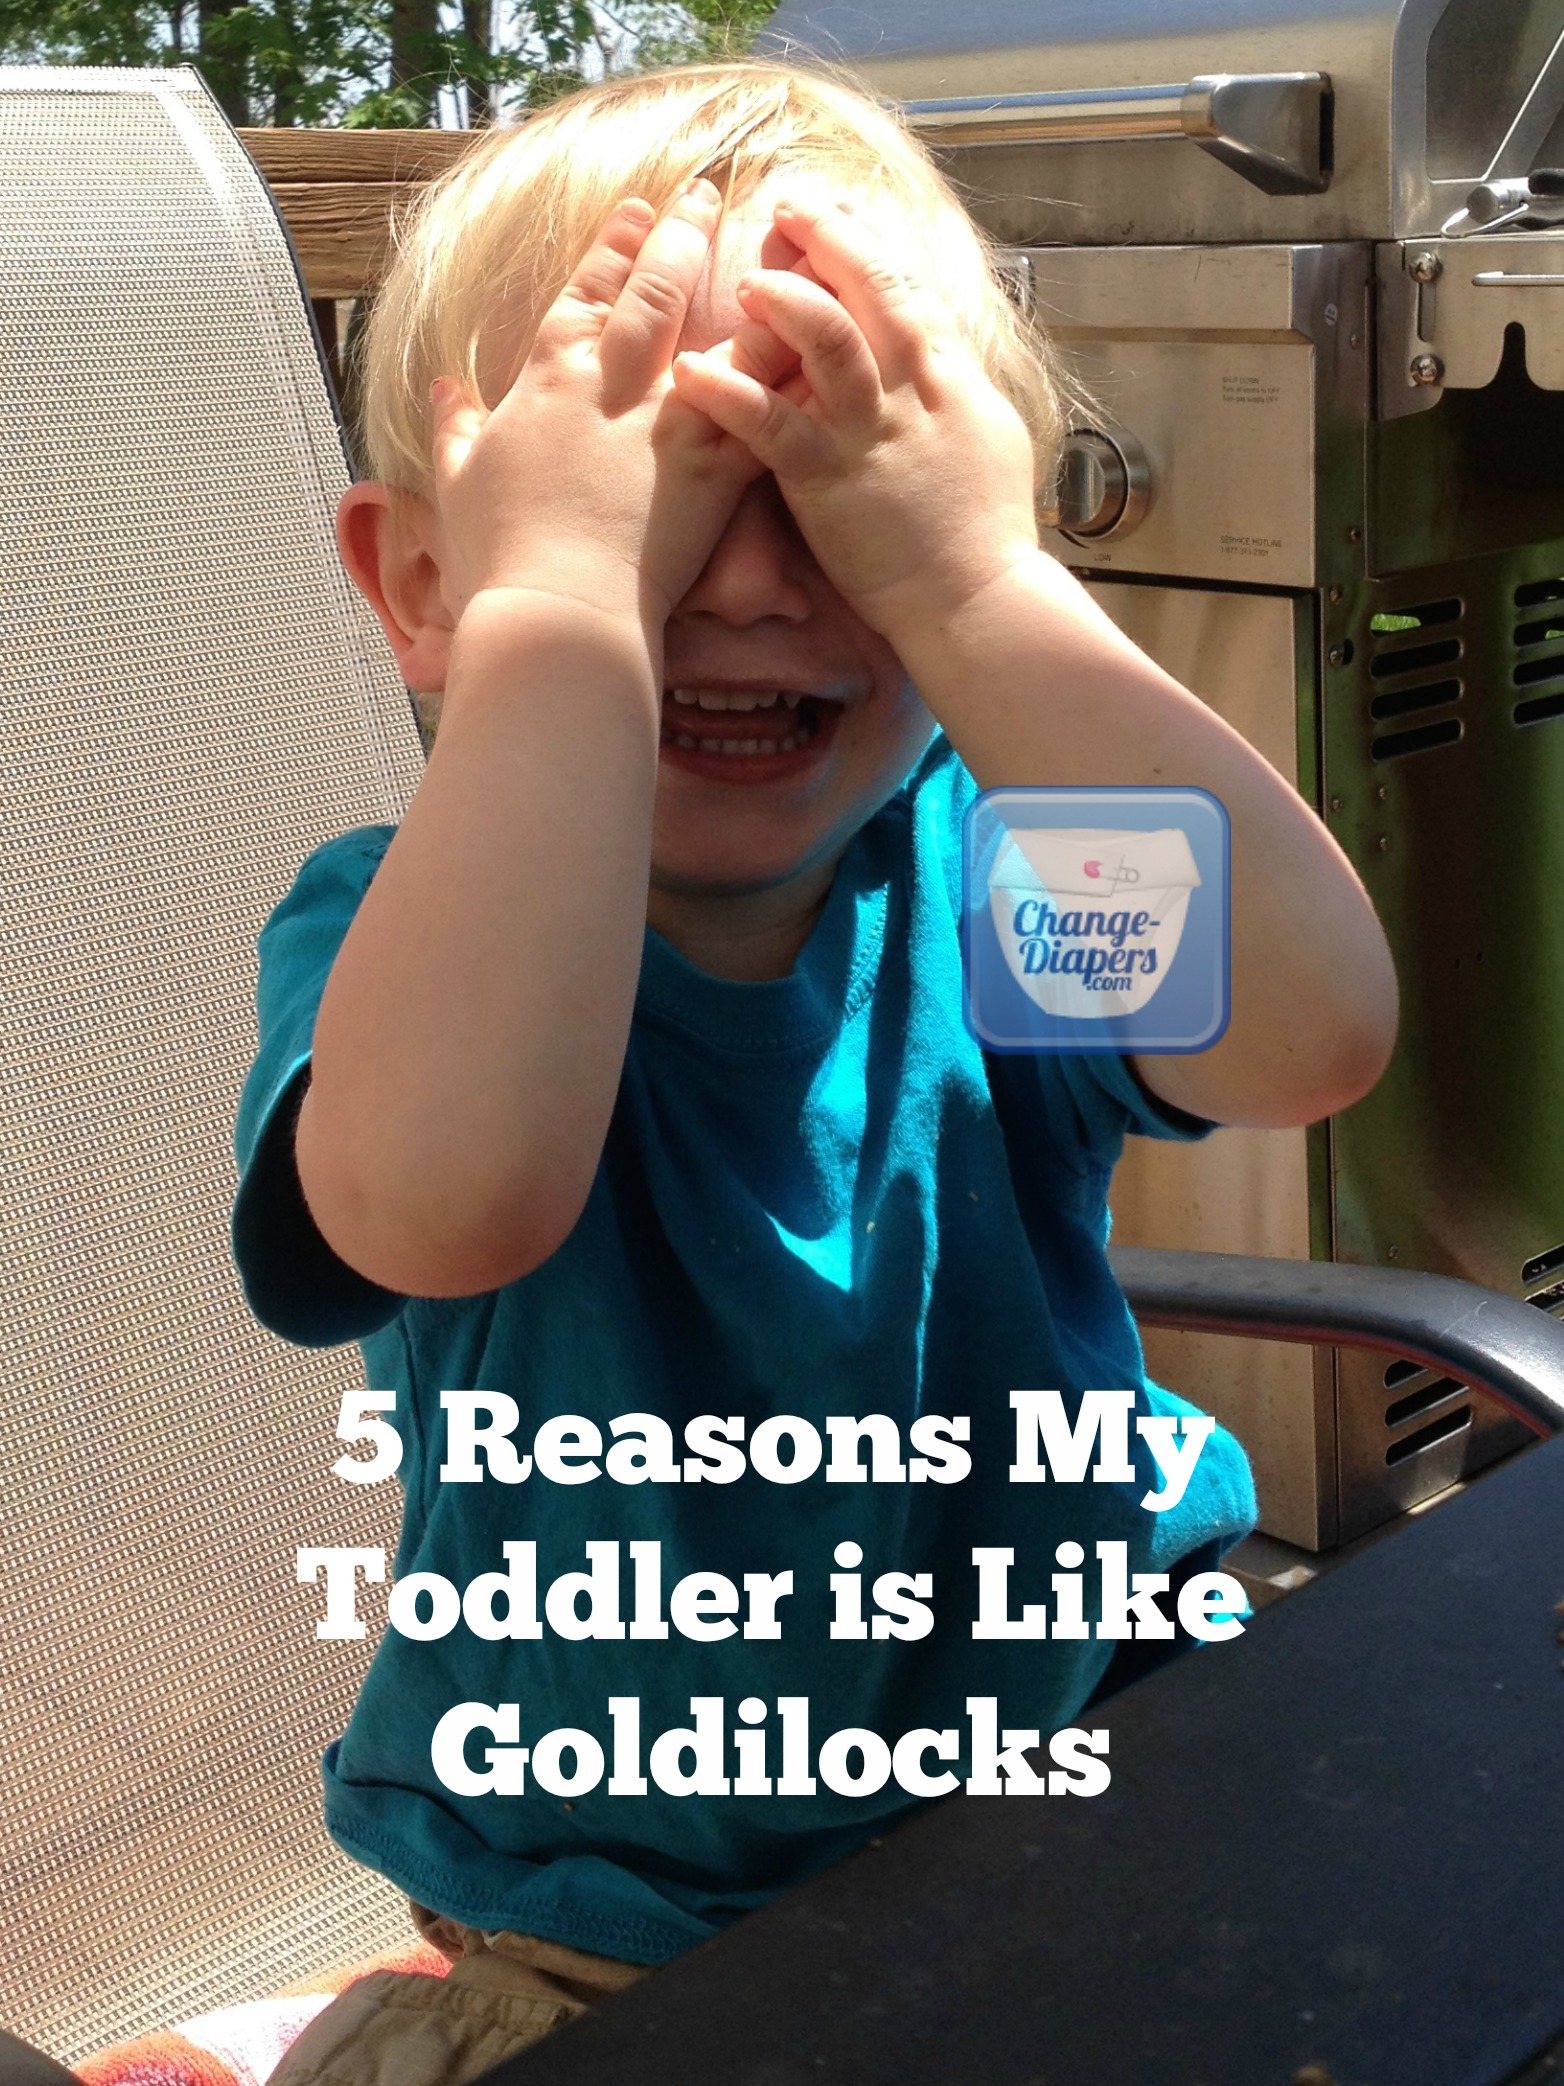 5 reasons my toddler is like goldilocks via @chgdiapers